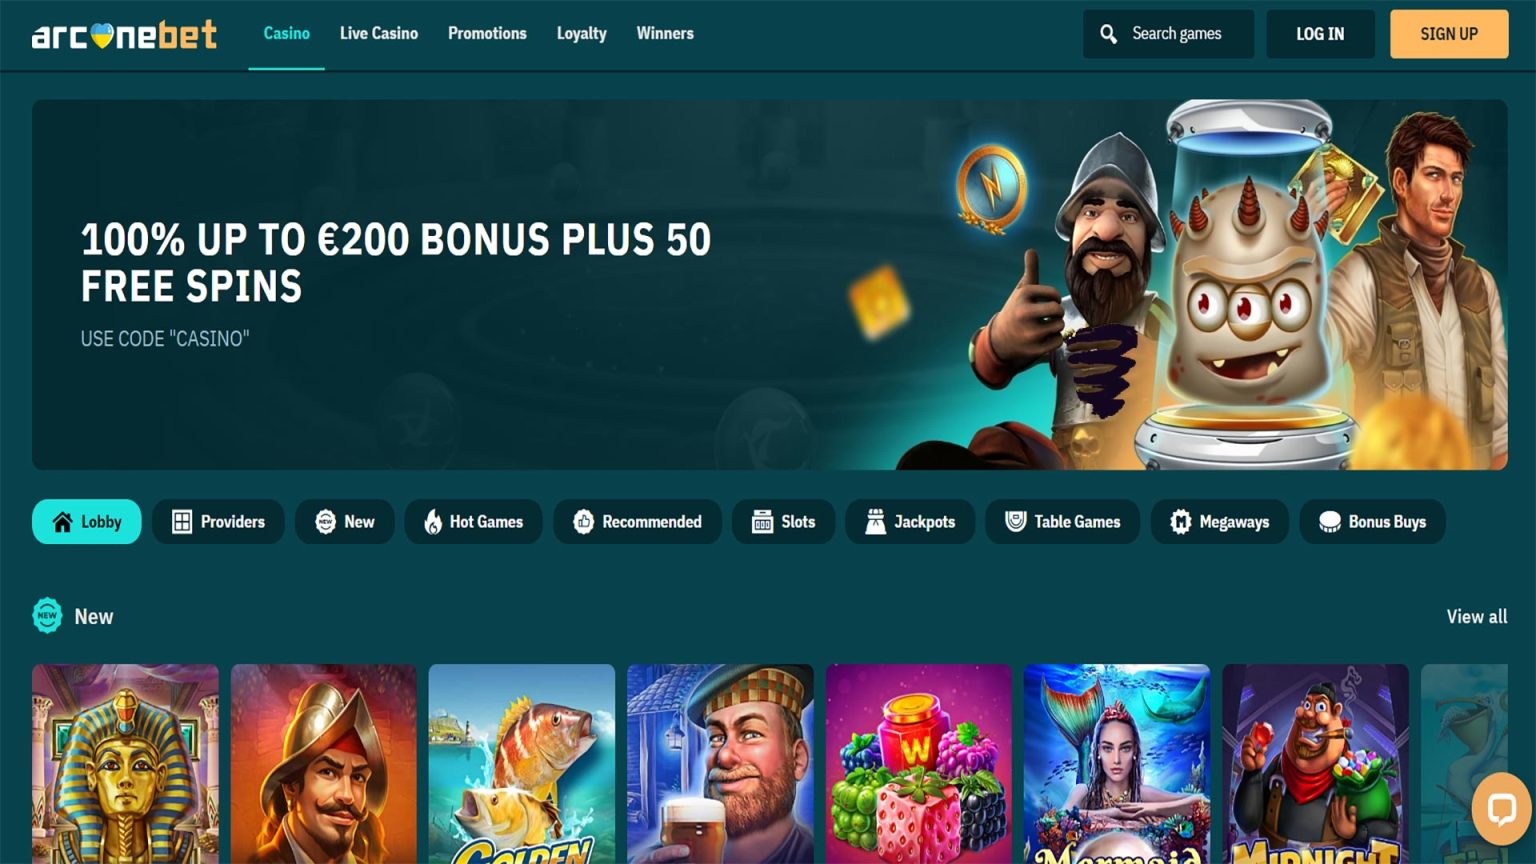 acrcanebet casino screenshot